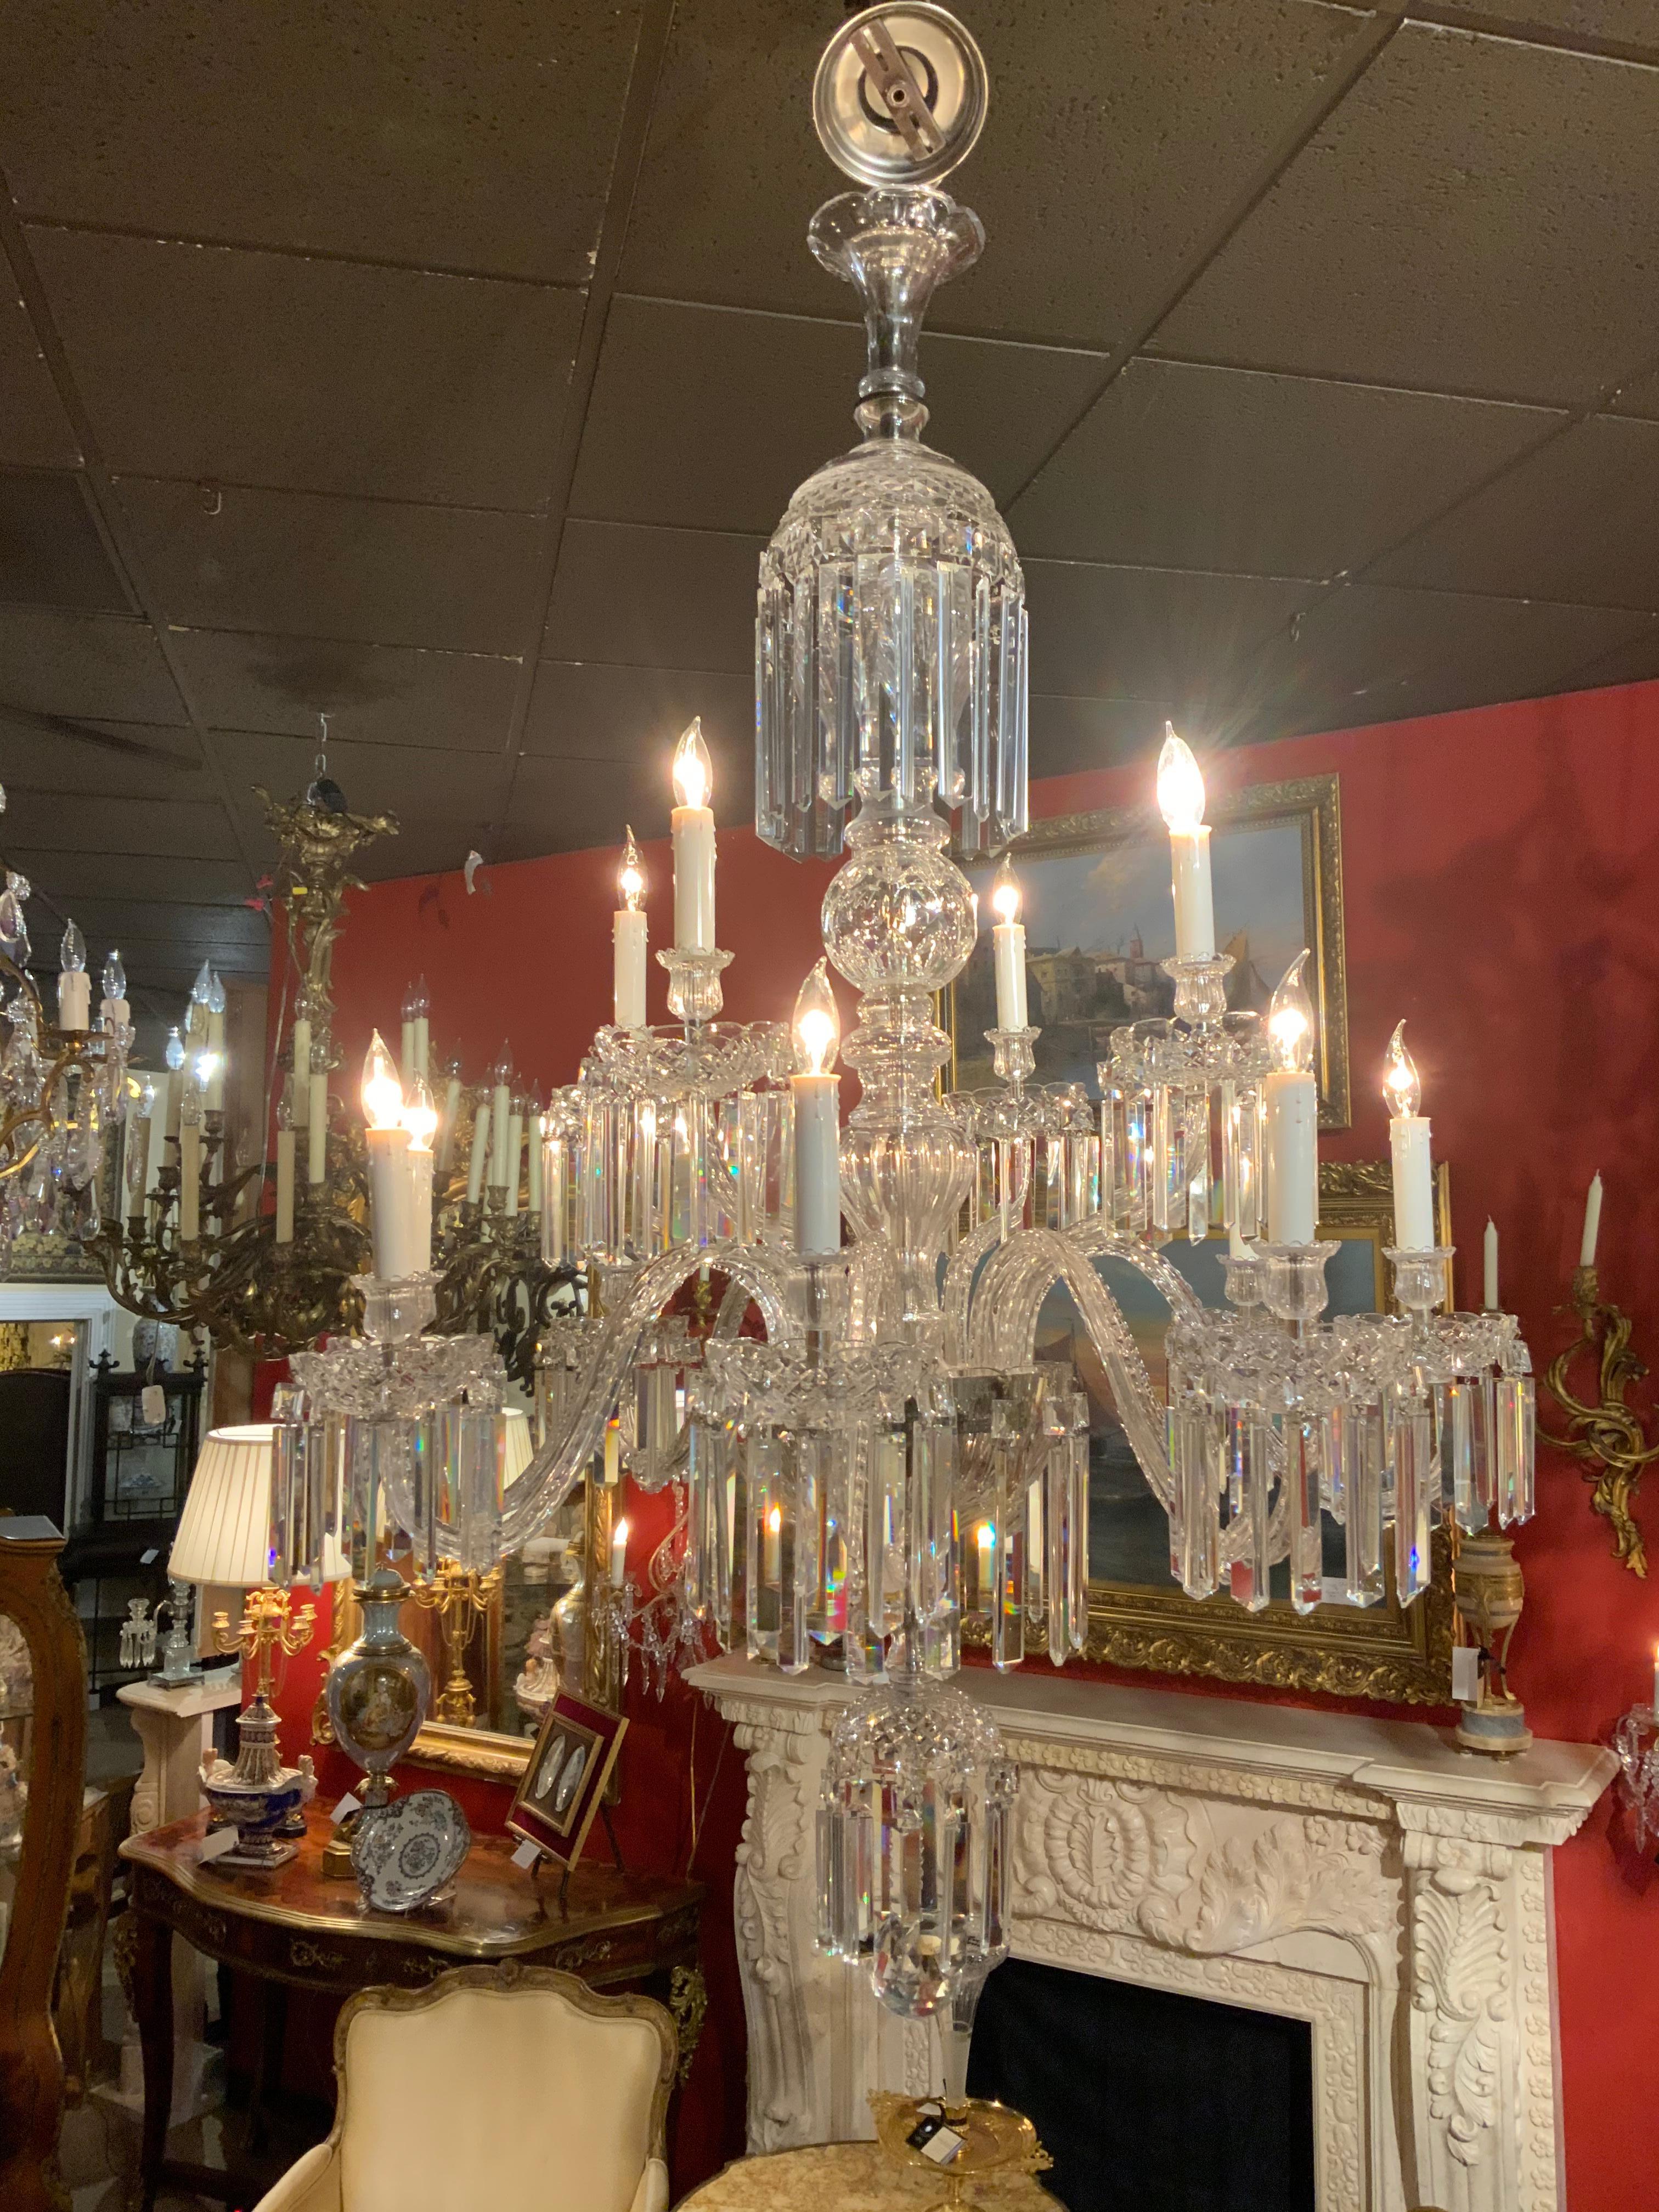 12 light crystal chandelier